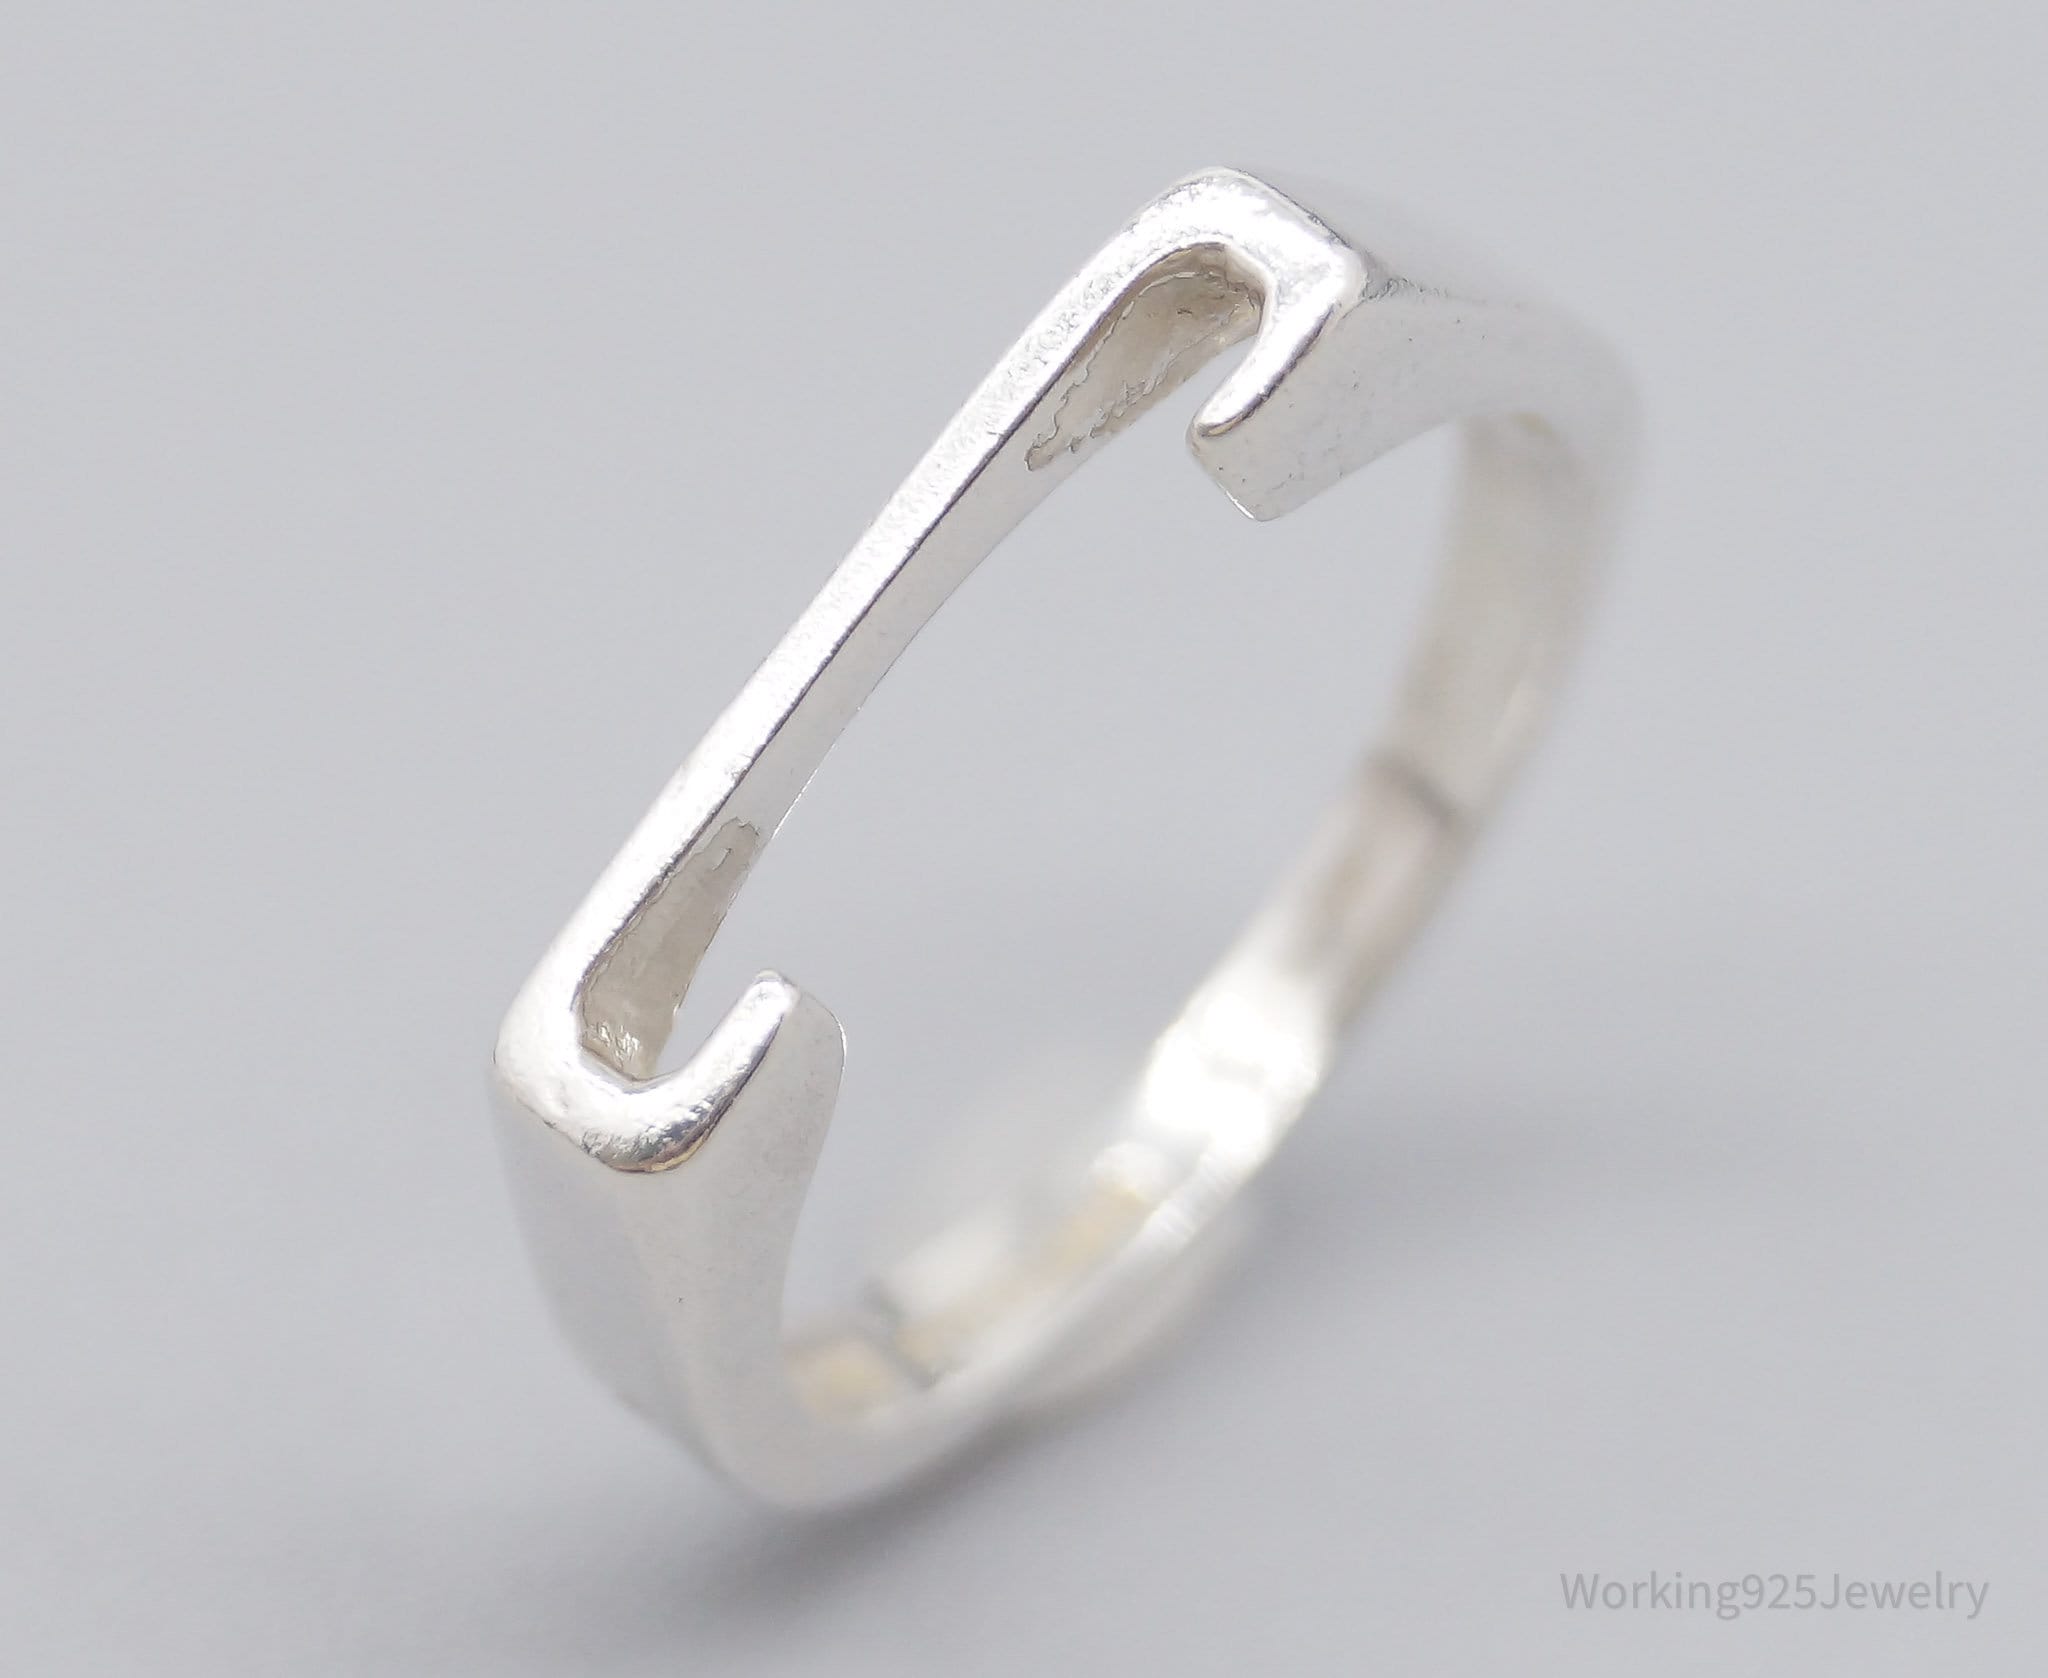 Vintage Designer Cellini "C" Initial Sterling Silver Ring - Size 6